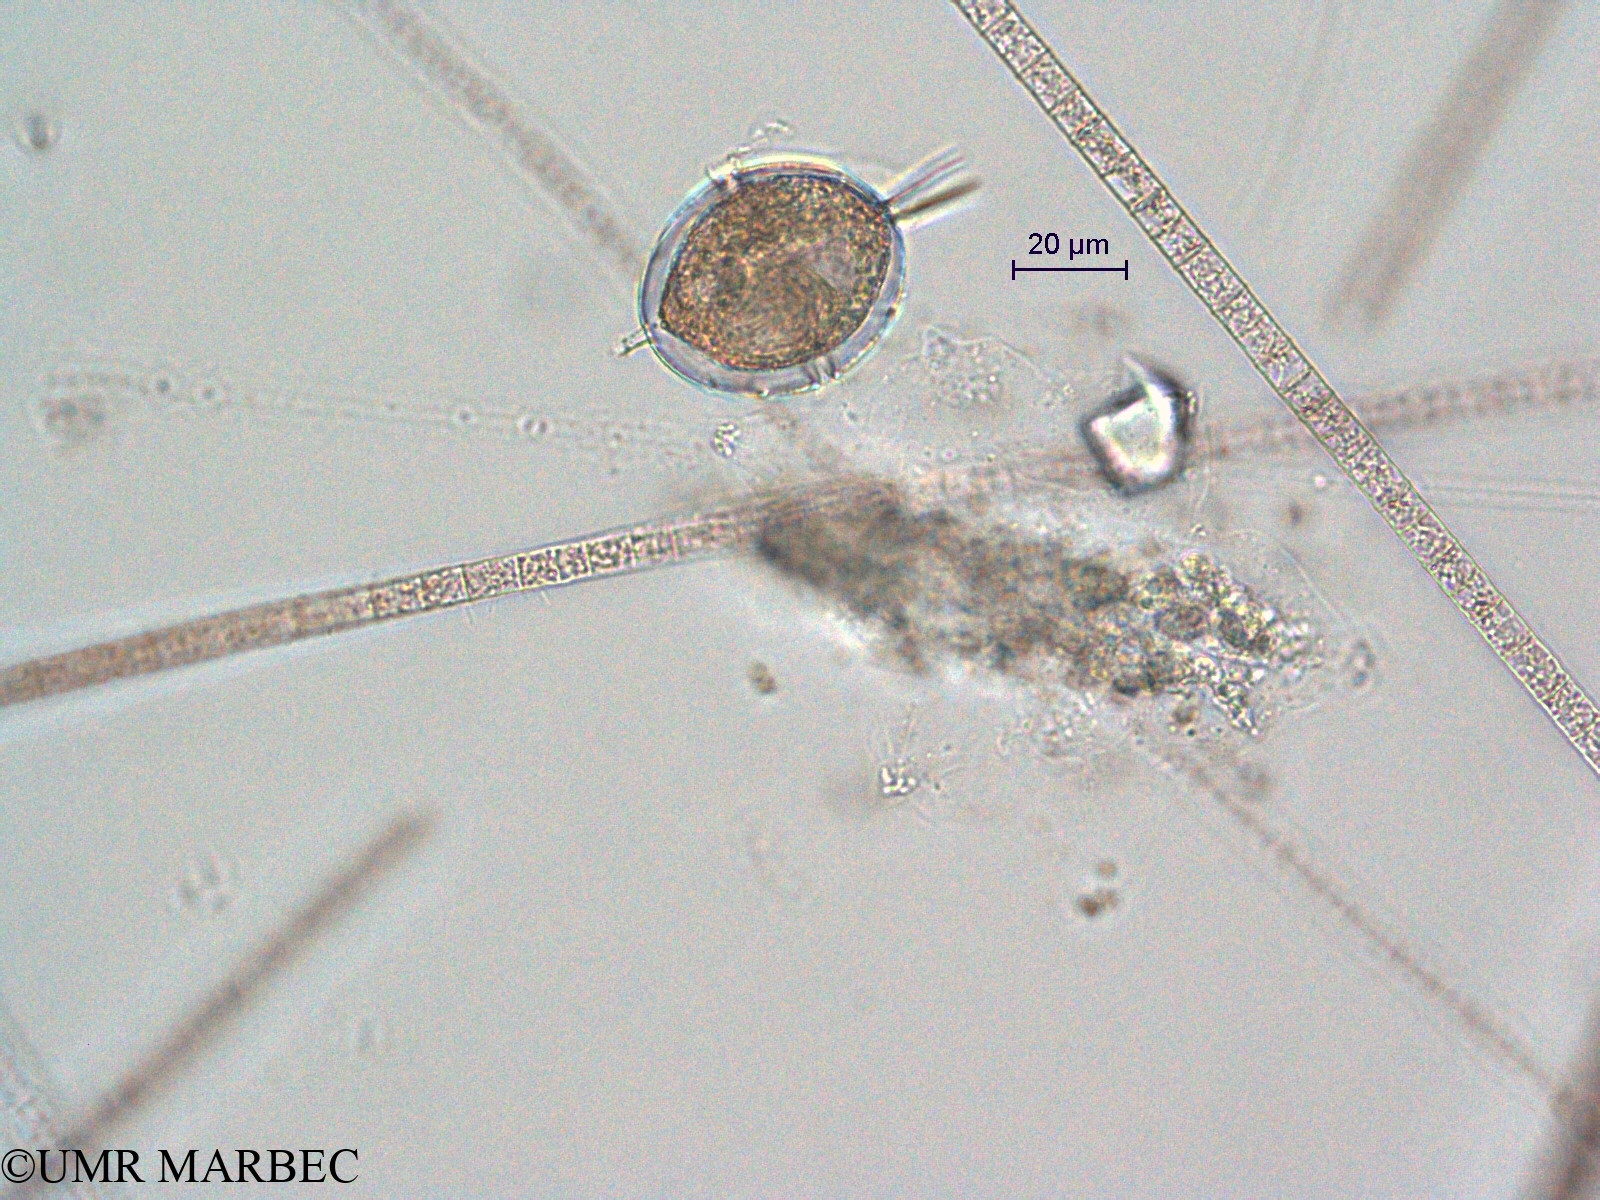 phyto/Scattered_Islands/all/COMMA April 2011/Protoperidinium sp29 (ancien Protoperidinium sp20 cf angusticollis)(copy).jpg